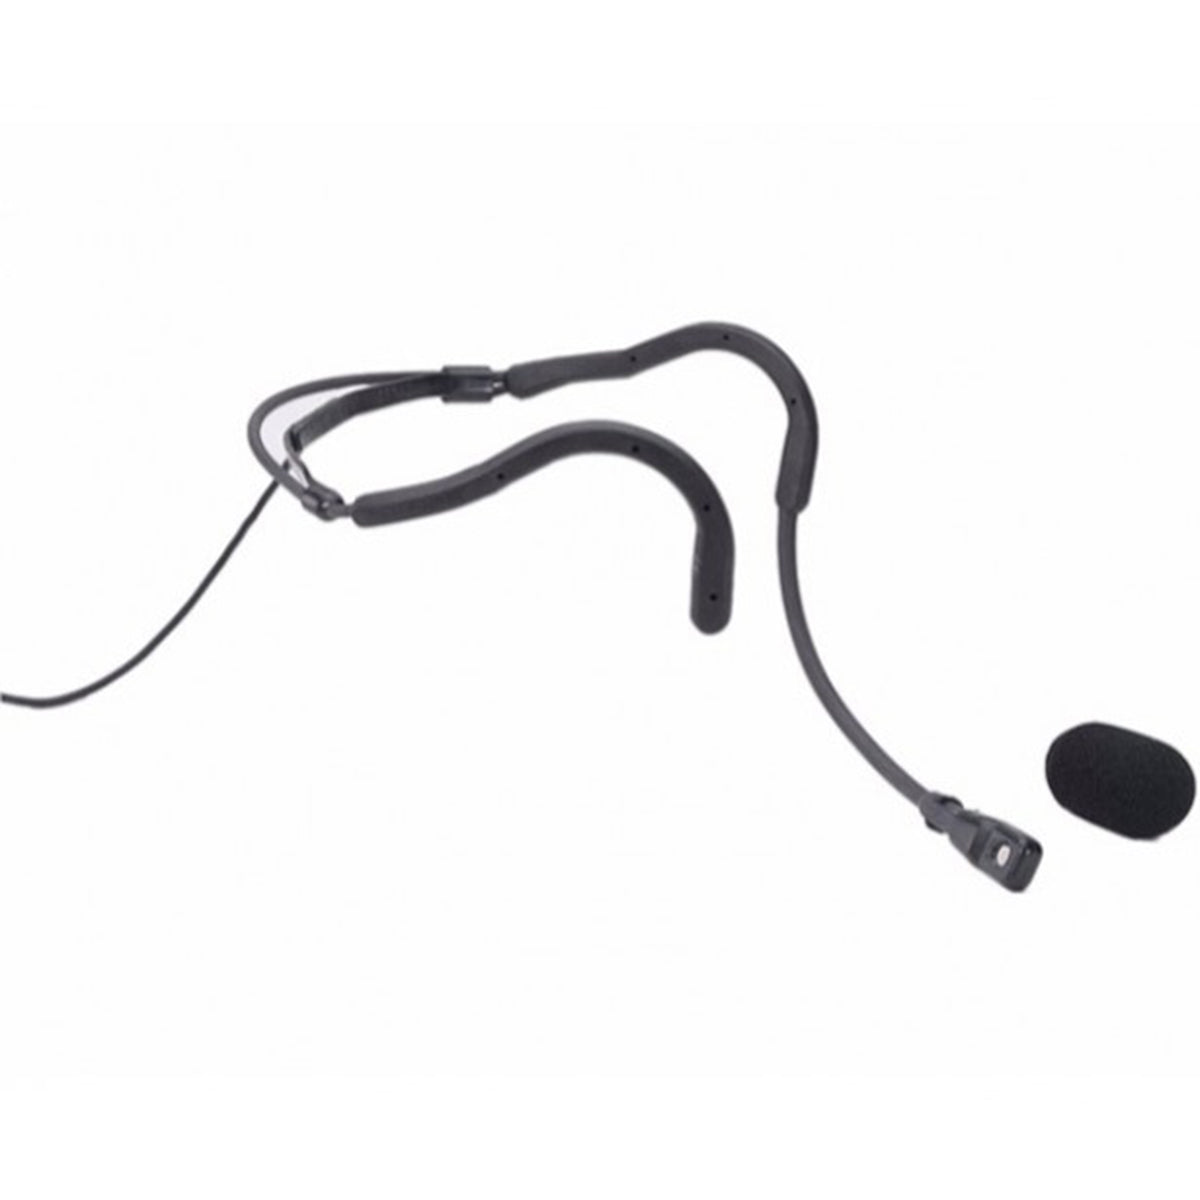 Samson Wireless QE: Headset Microphone Mic w/ P3 Connecter